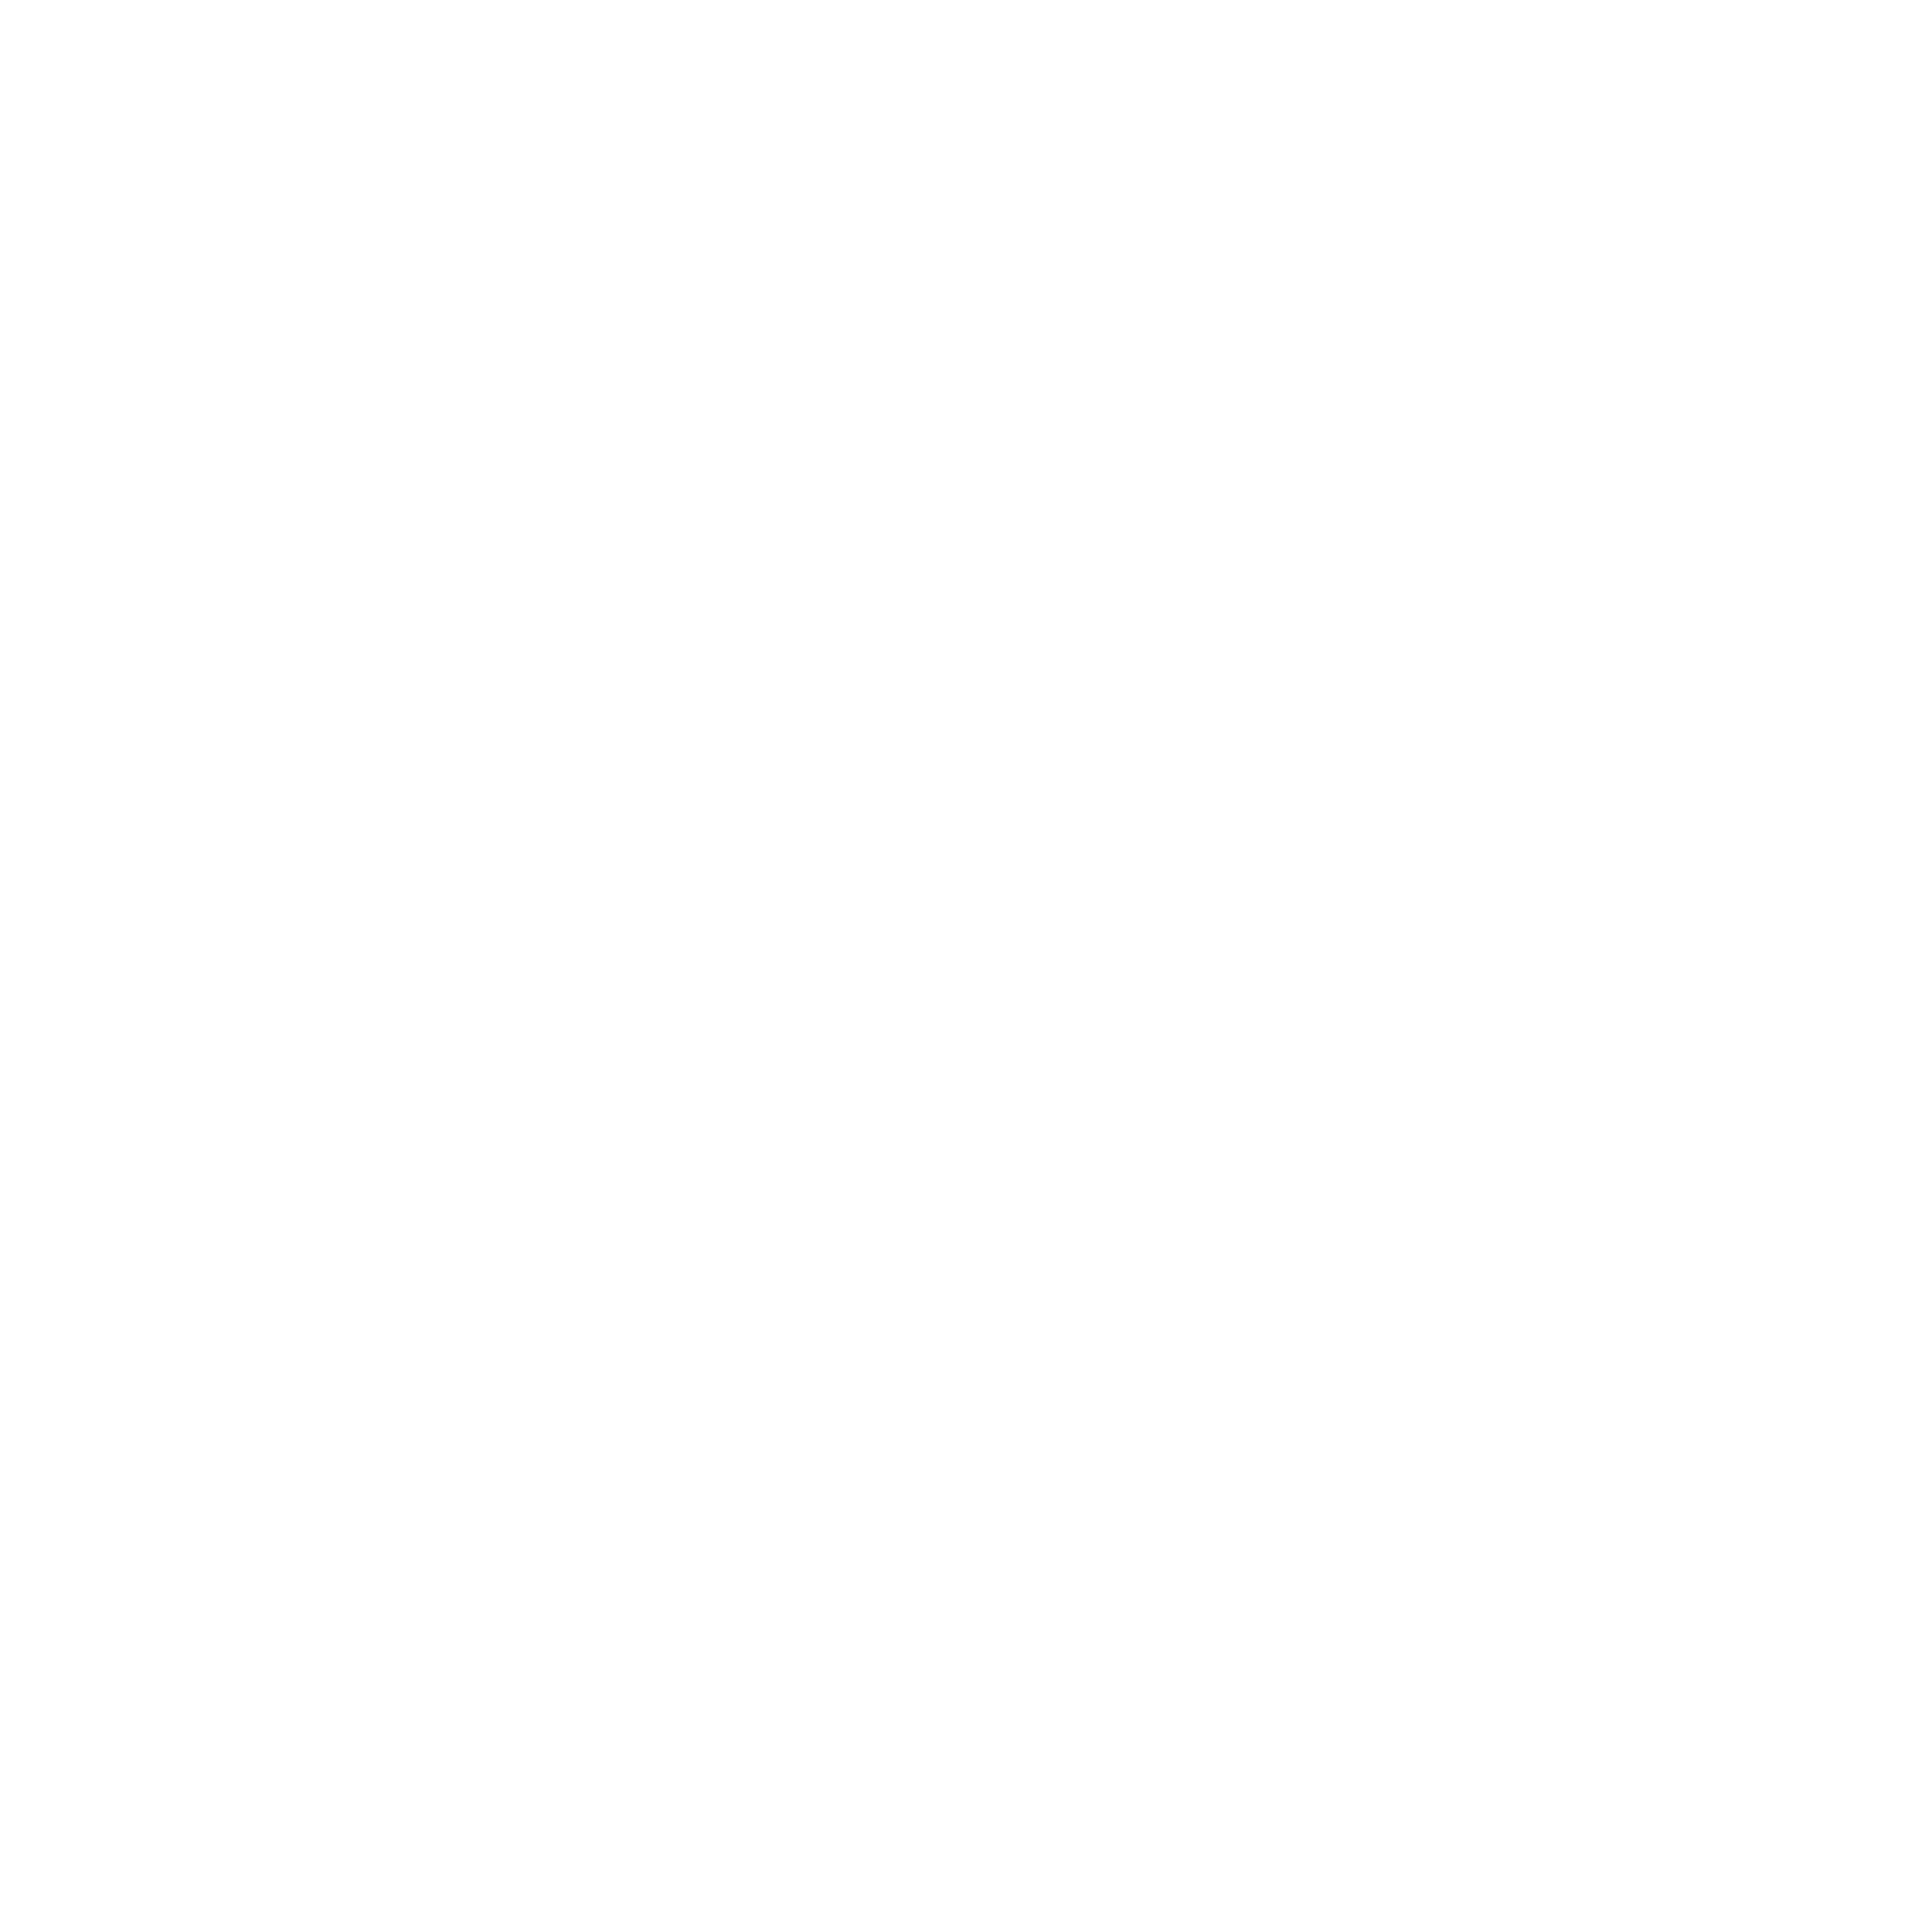 Flex-a-lite Logo - Flex a lite Logo PNG Transparent & SVG Vector